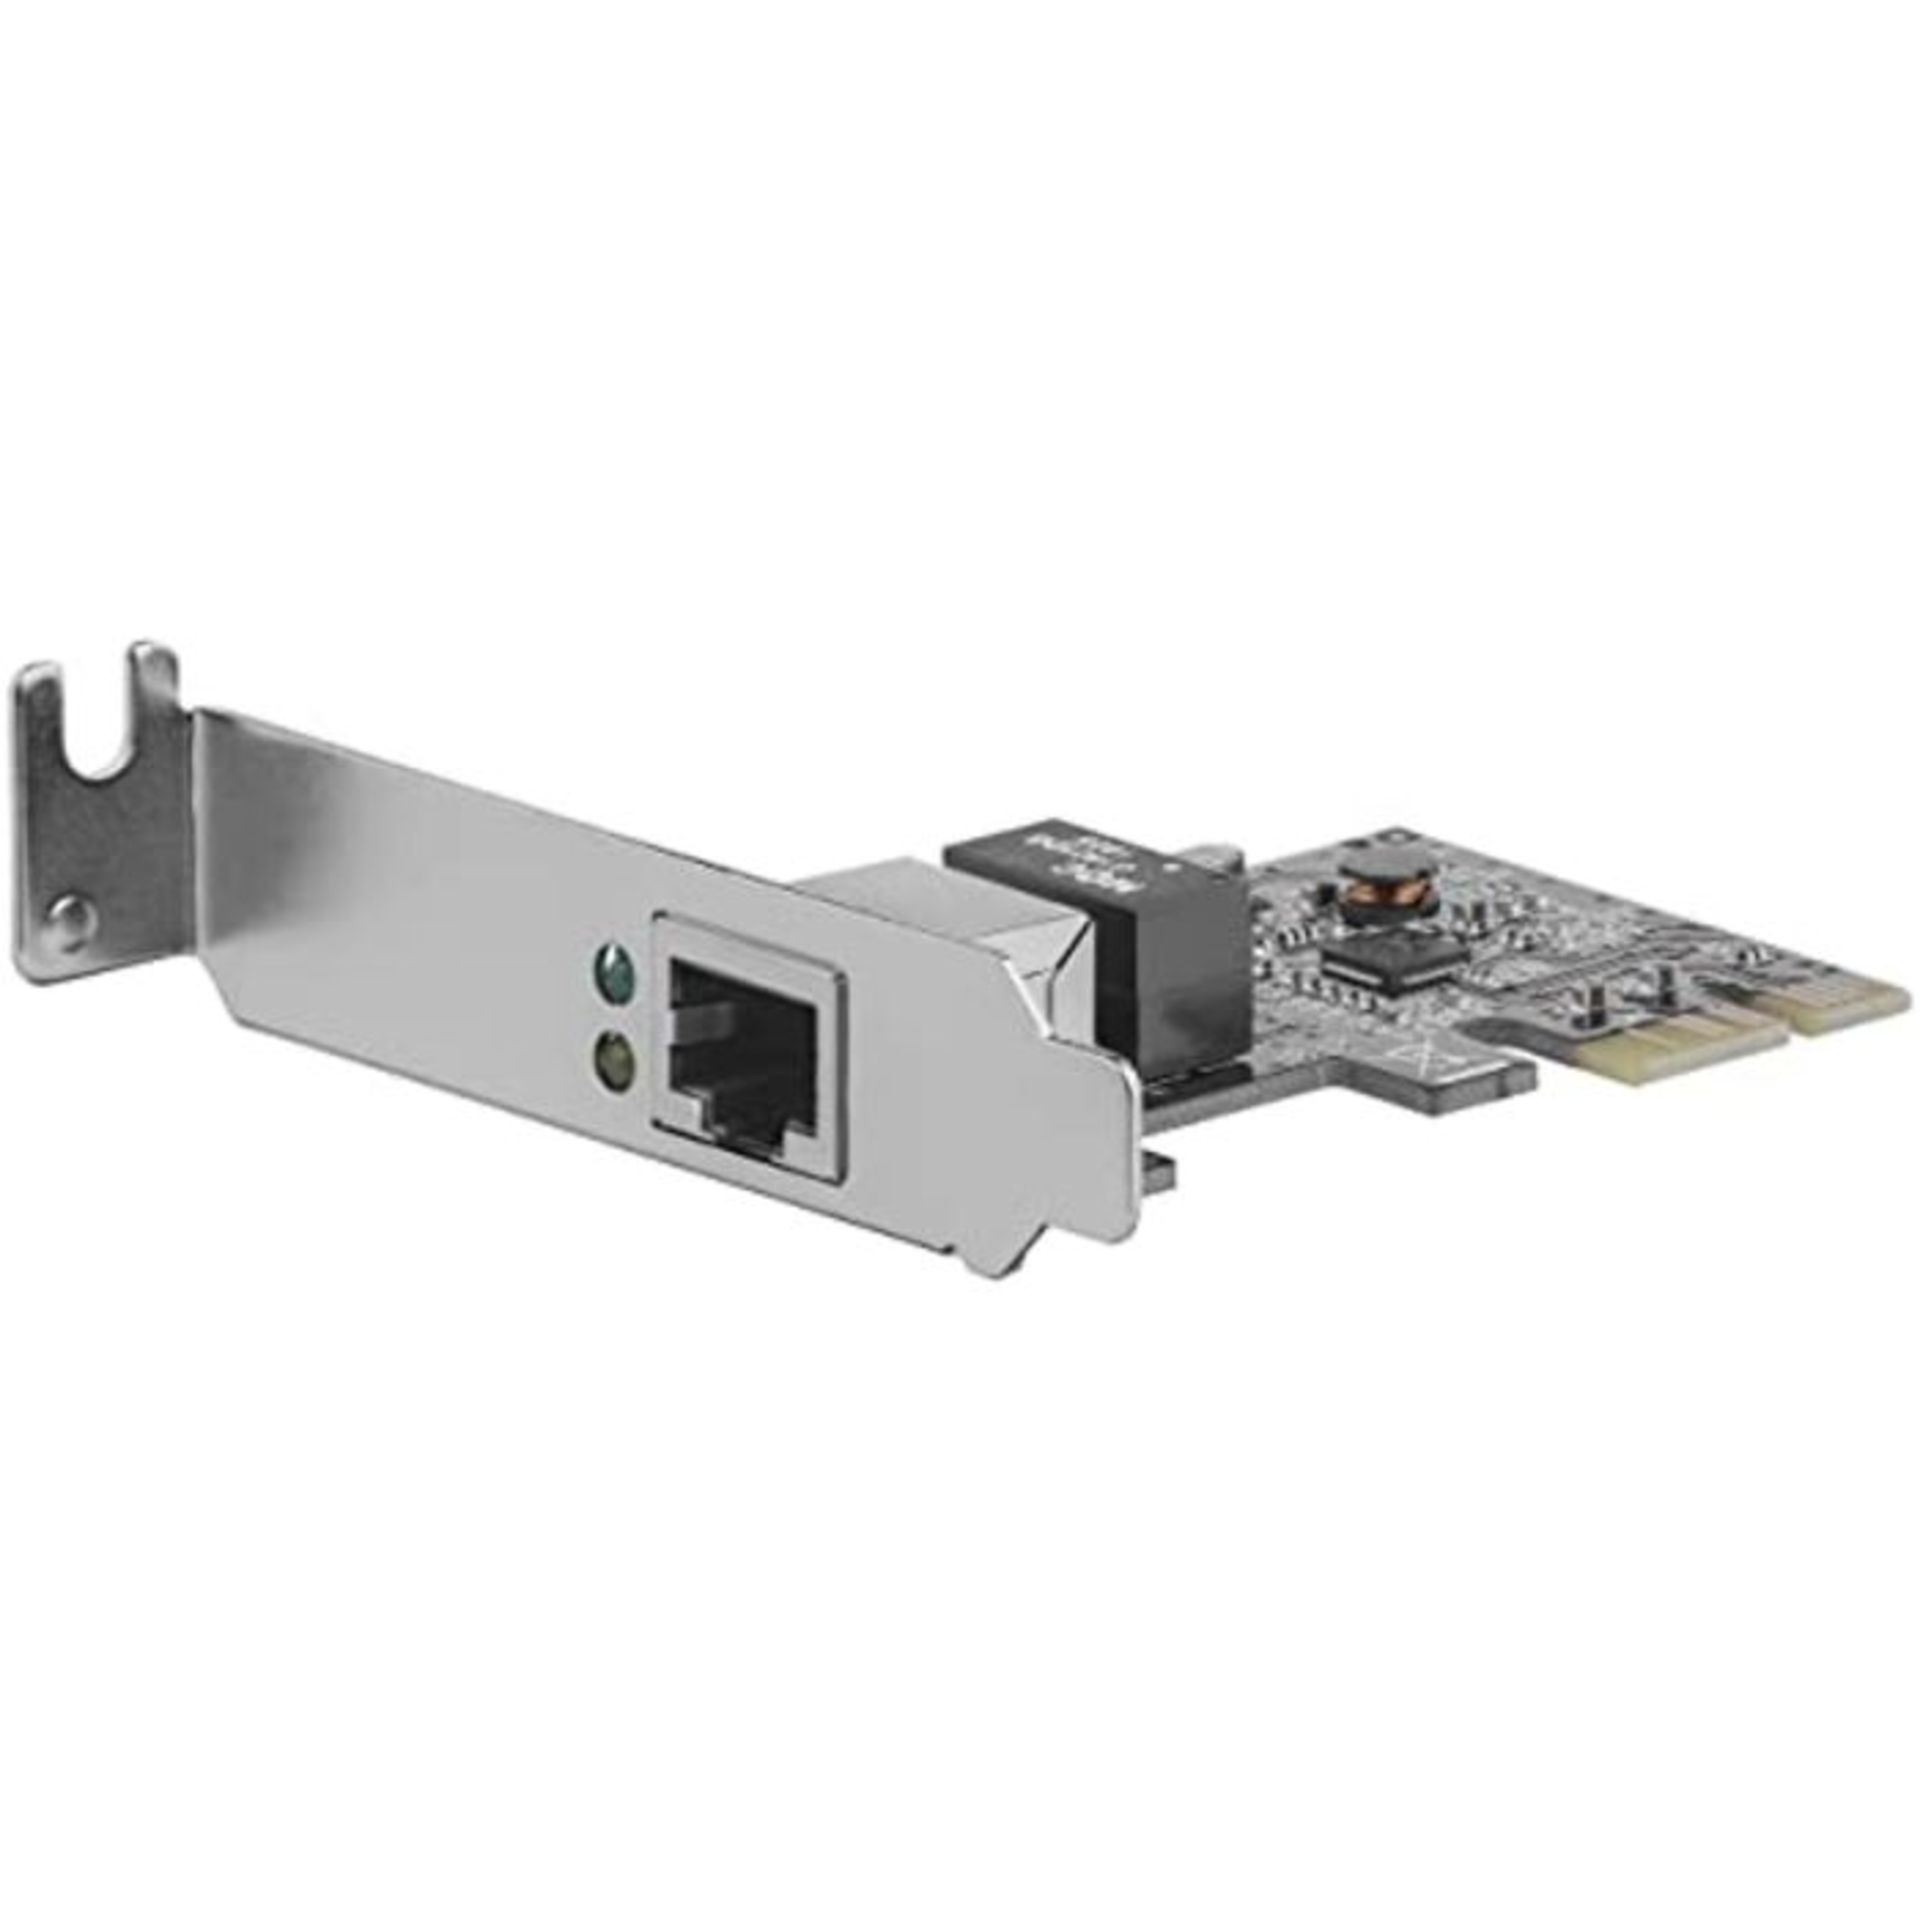 StarTech.com 1 Port PCIe Network Card - Low Profile - RJ45 Port - Realtek RTL8111H Chi